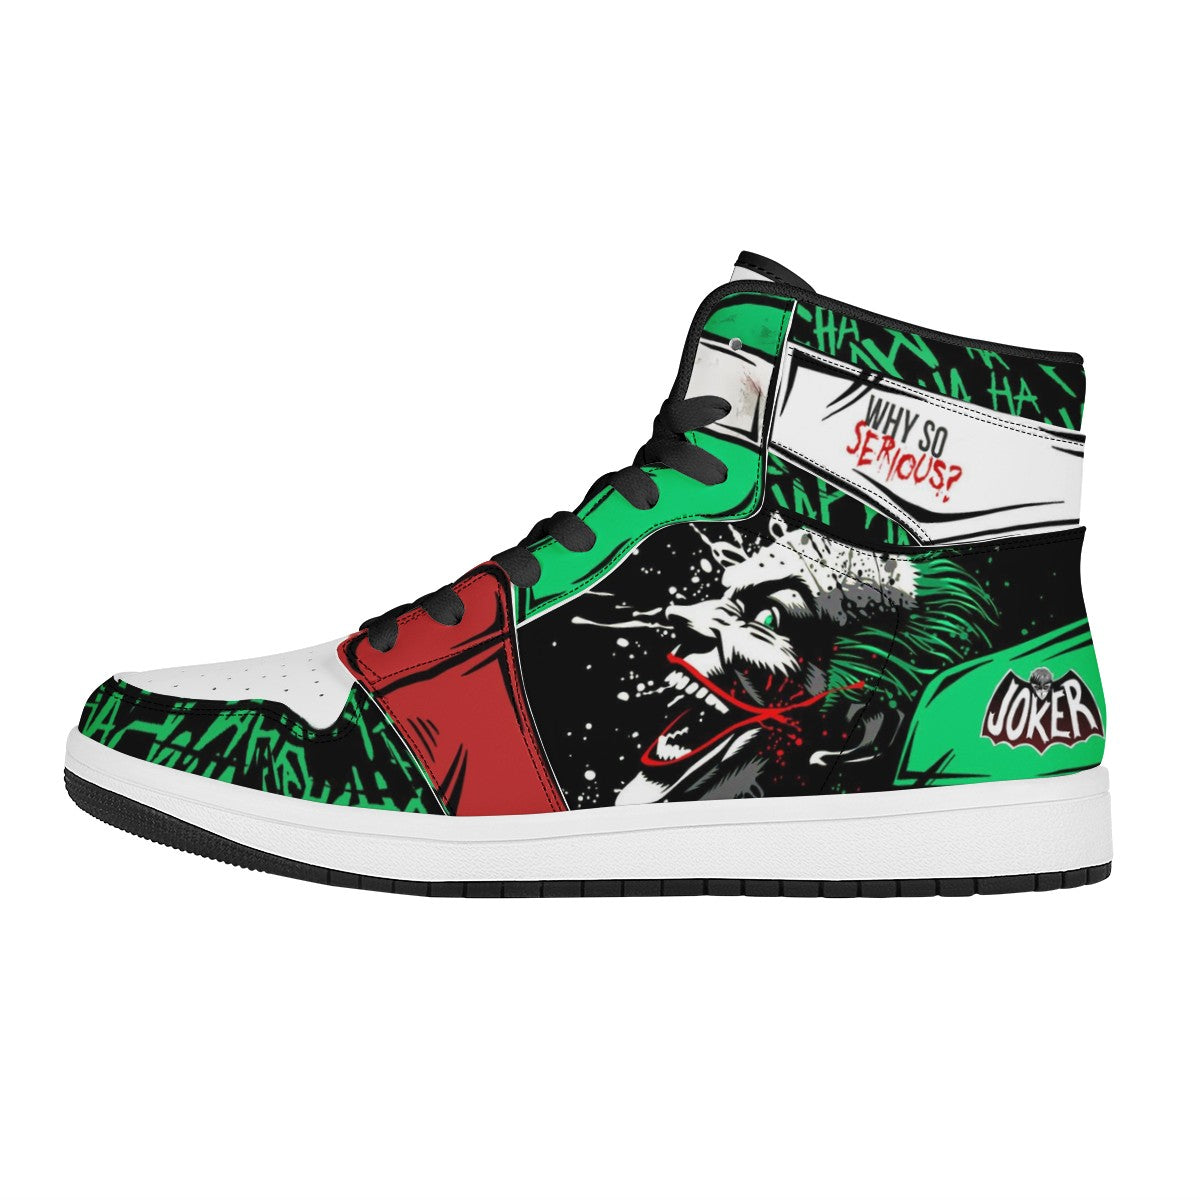 Joker Custom Nike Air Jordan 1 Leather Sneaker